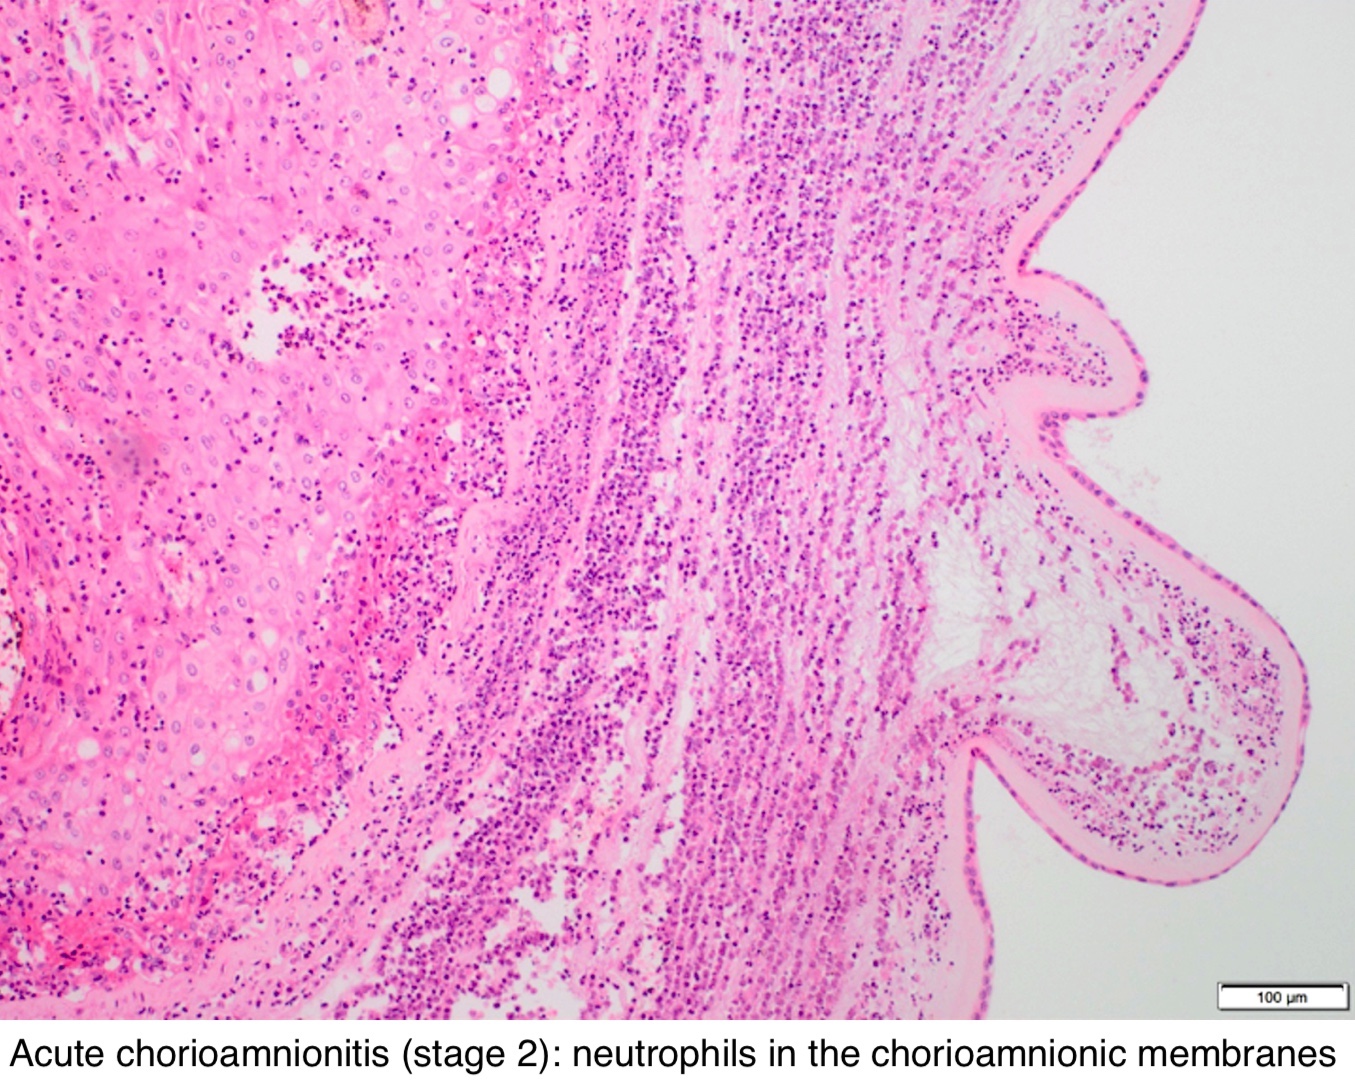 Pathology Outlines - Acute chorioamnionitis